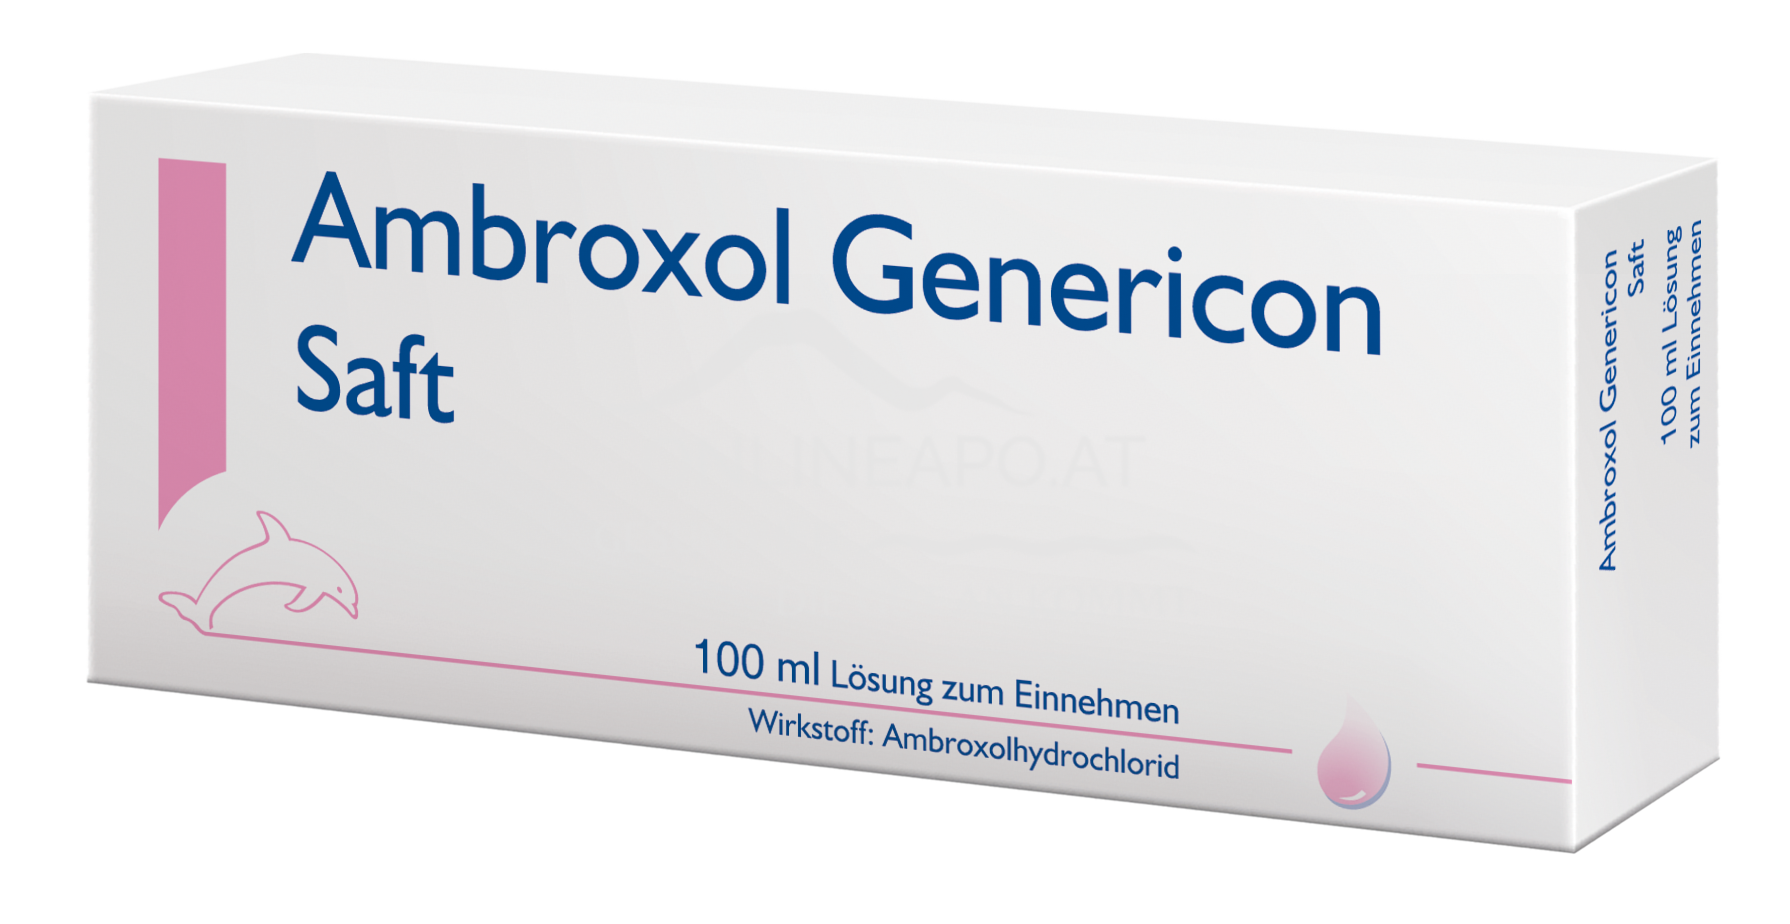 Ambroxol Genericon Saft